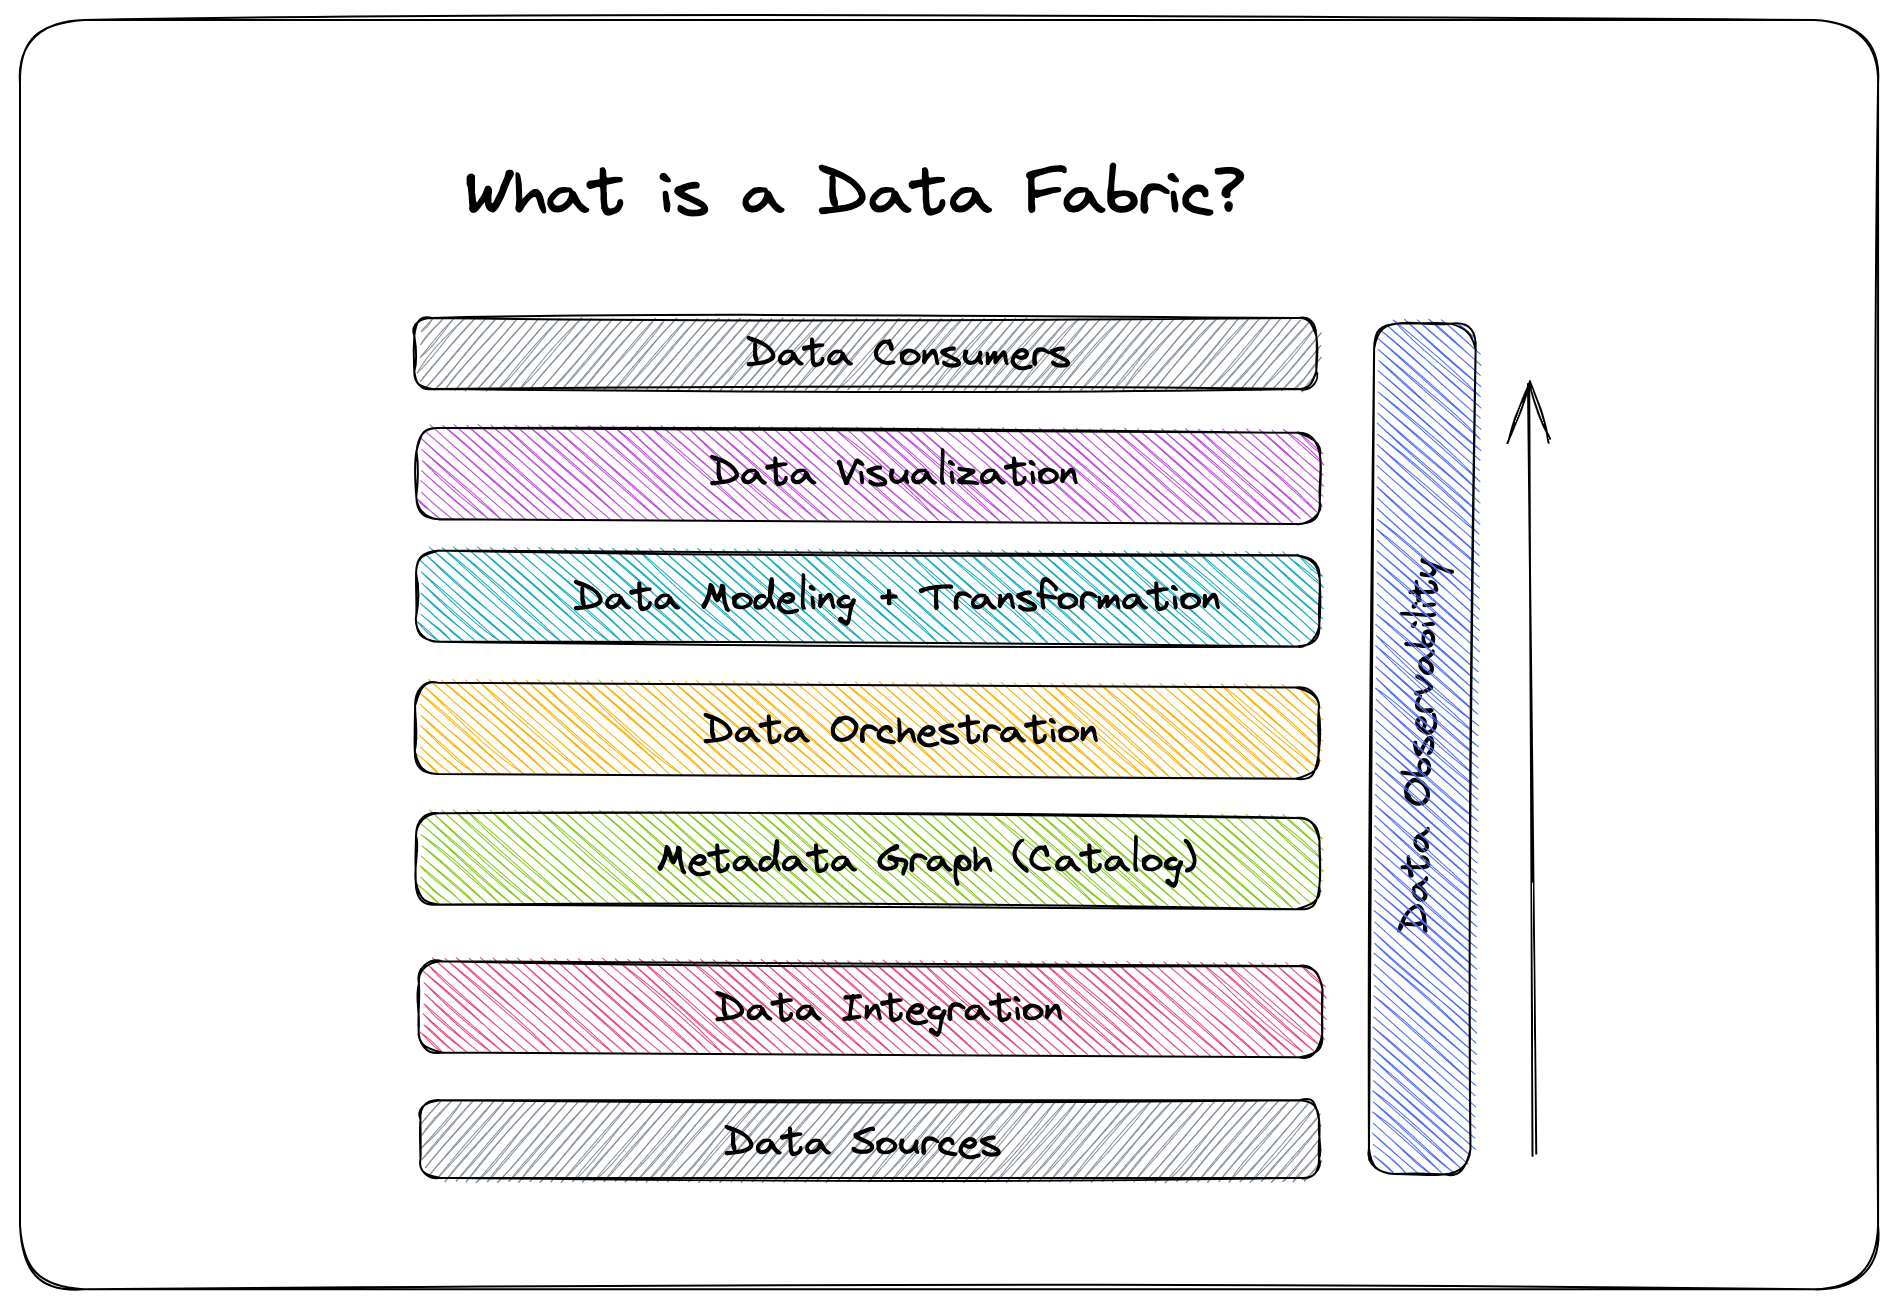 A data fabric diagram